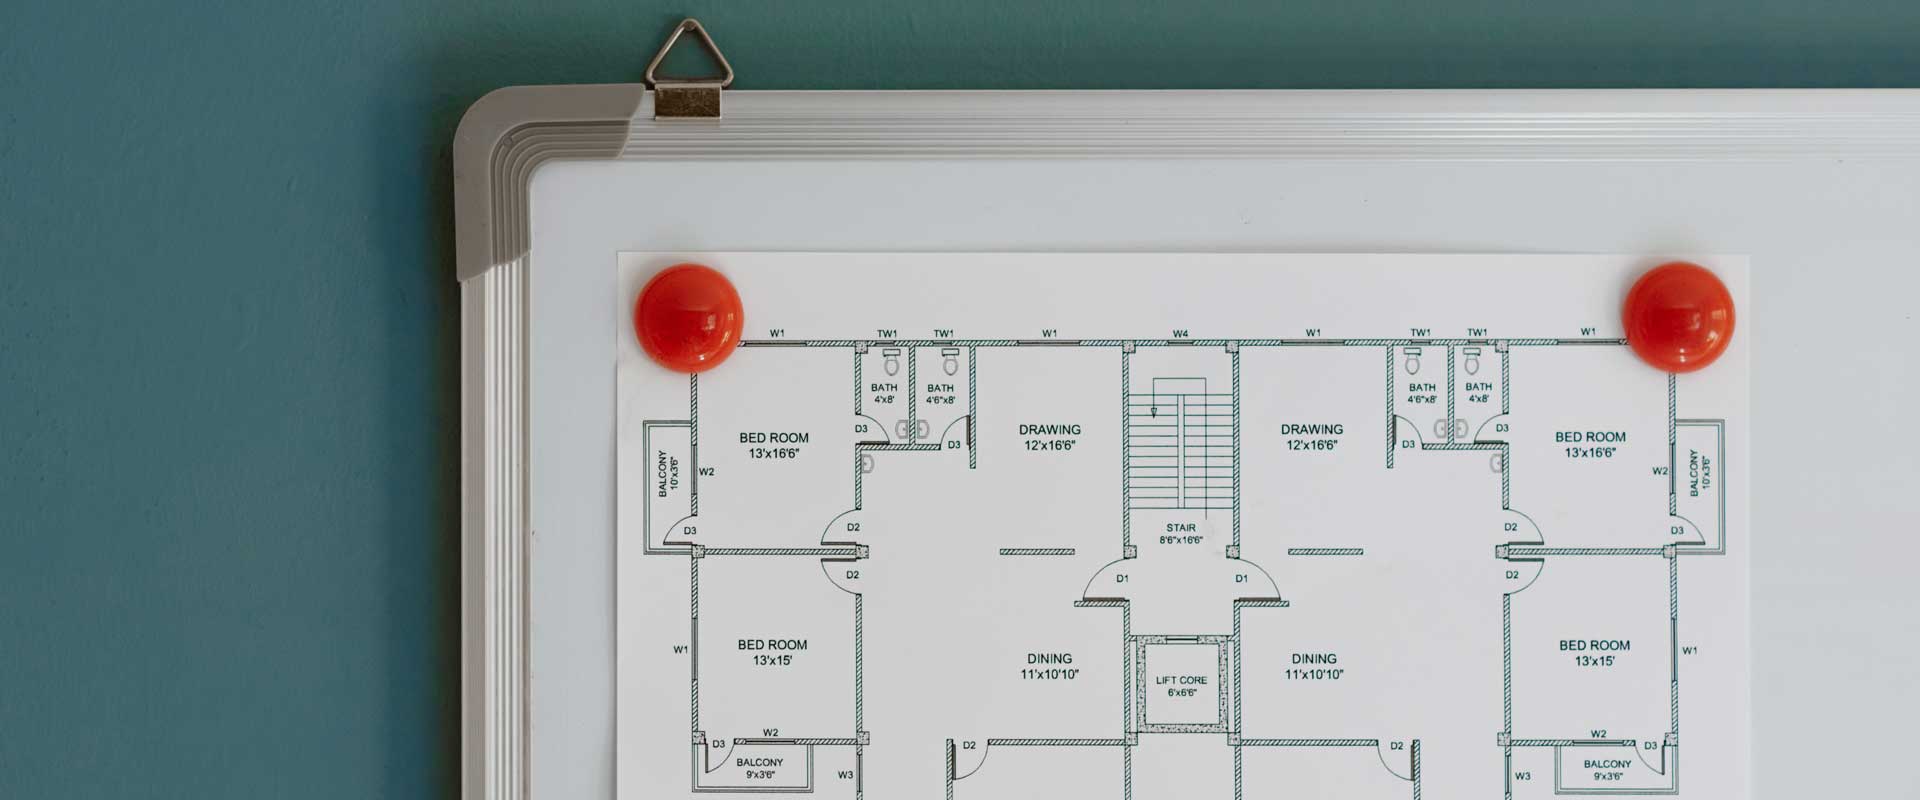 printed floor plans for house on whiteboard